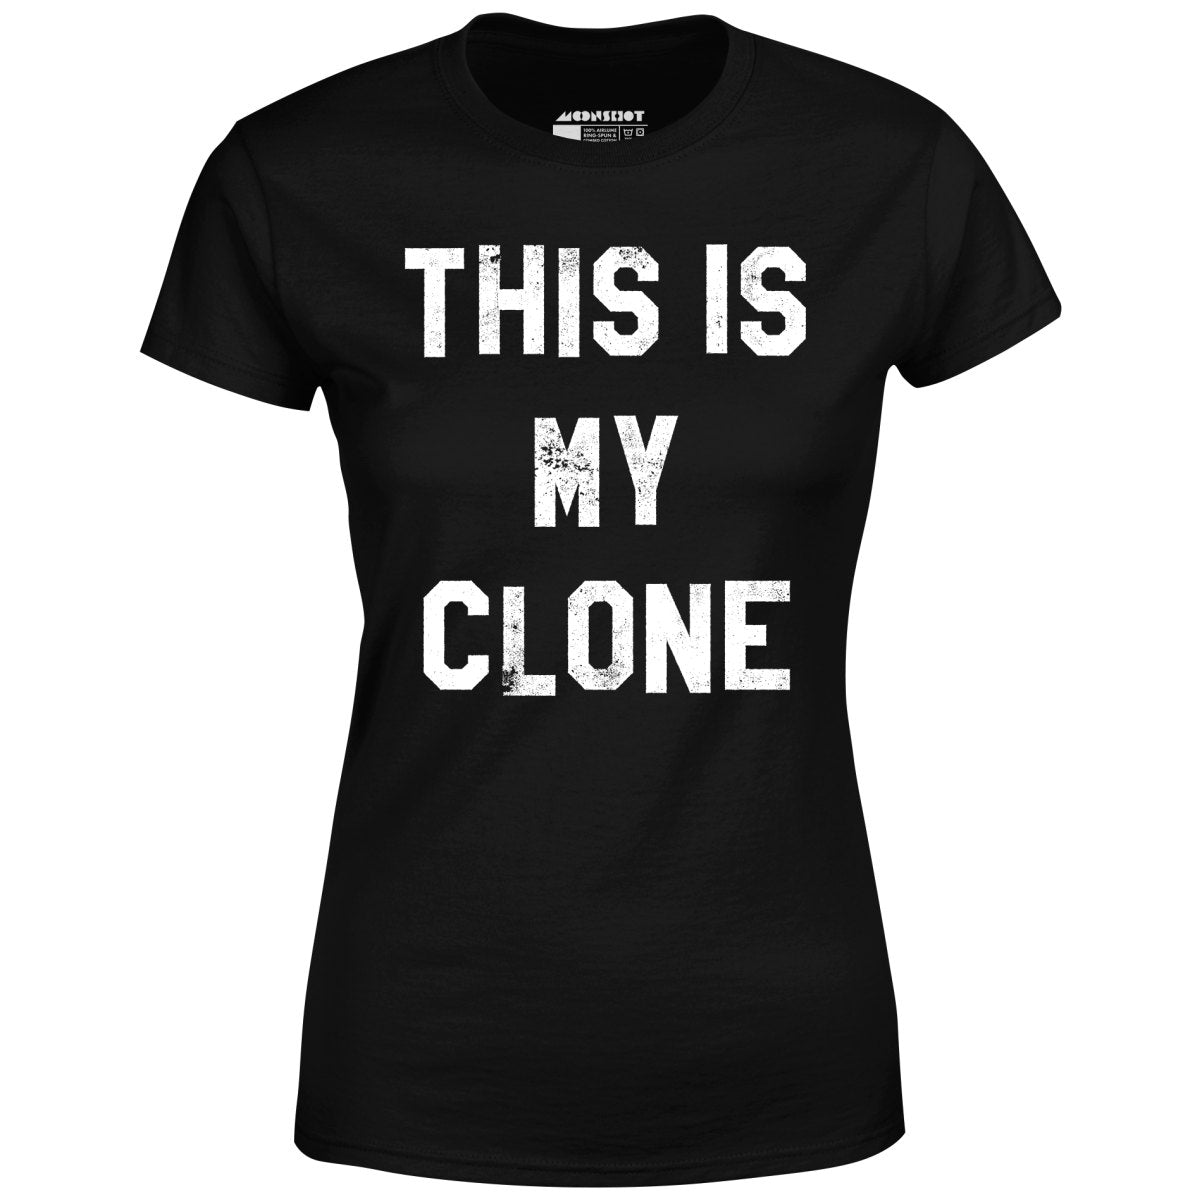 This is My Clone - Women's T-Shirt